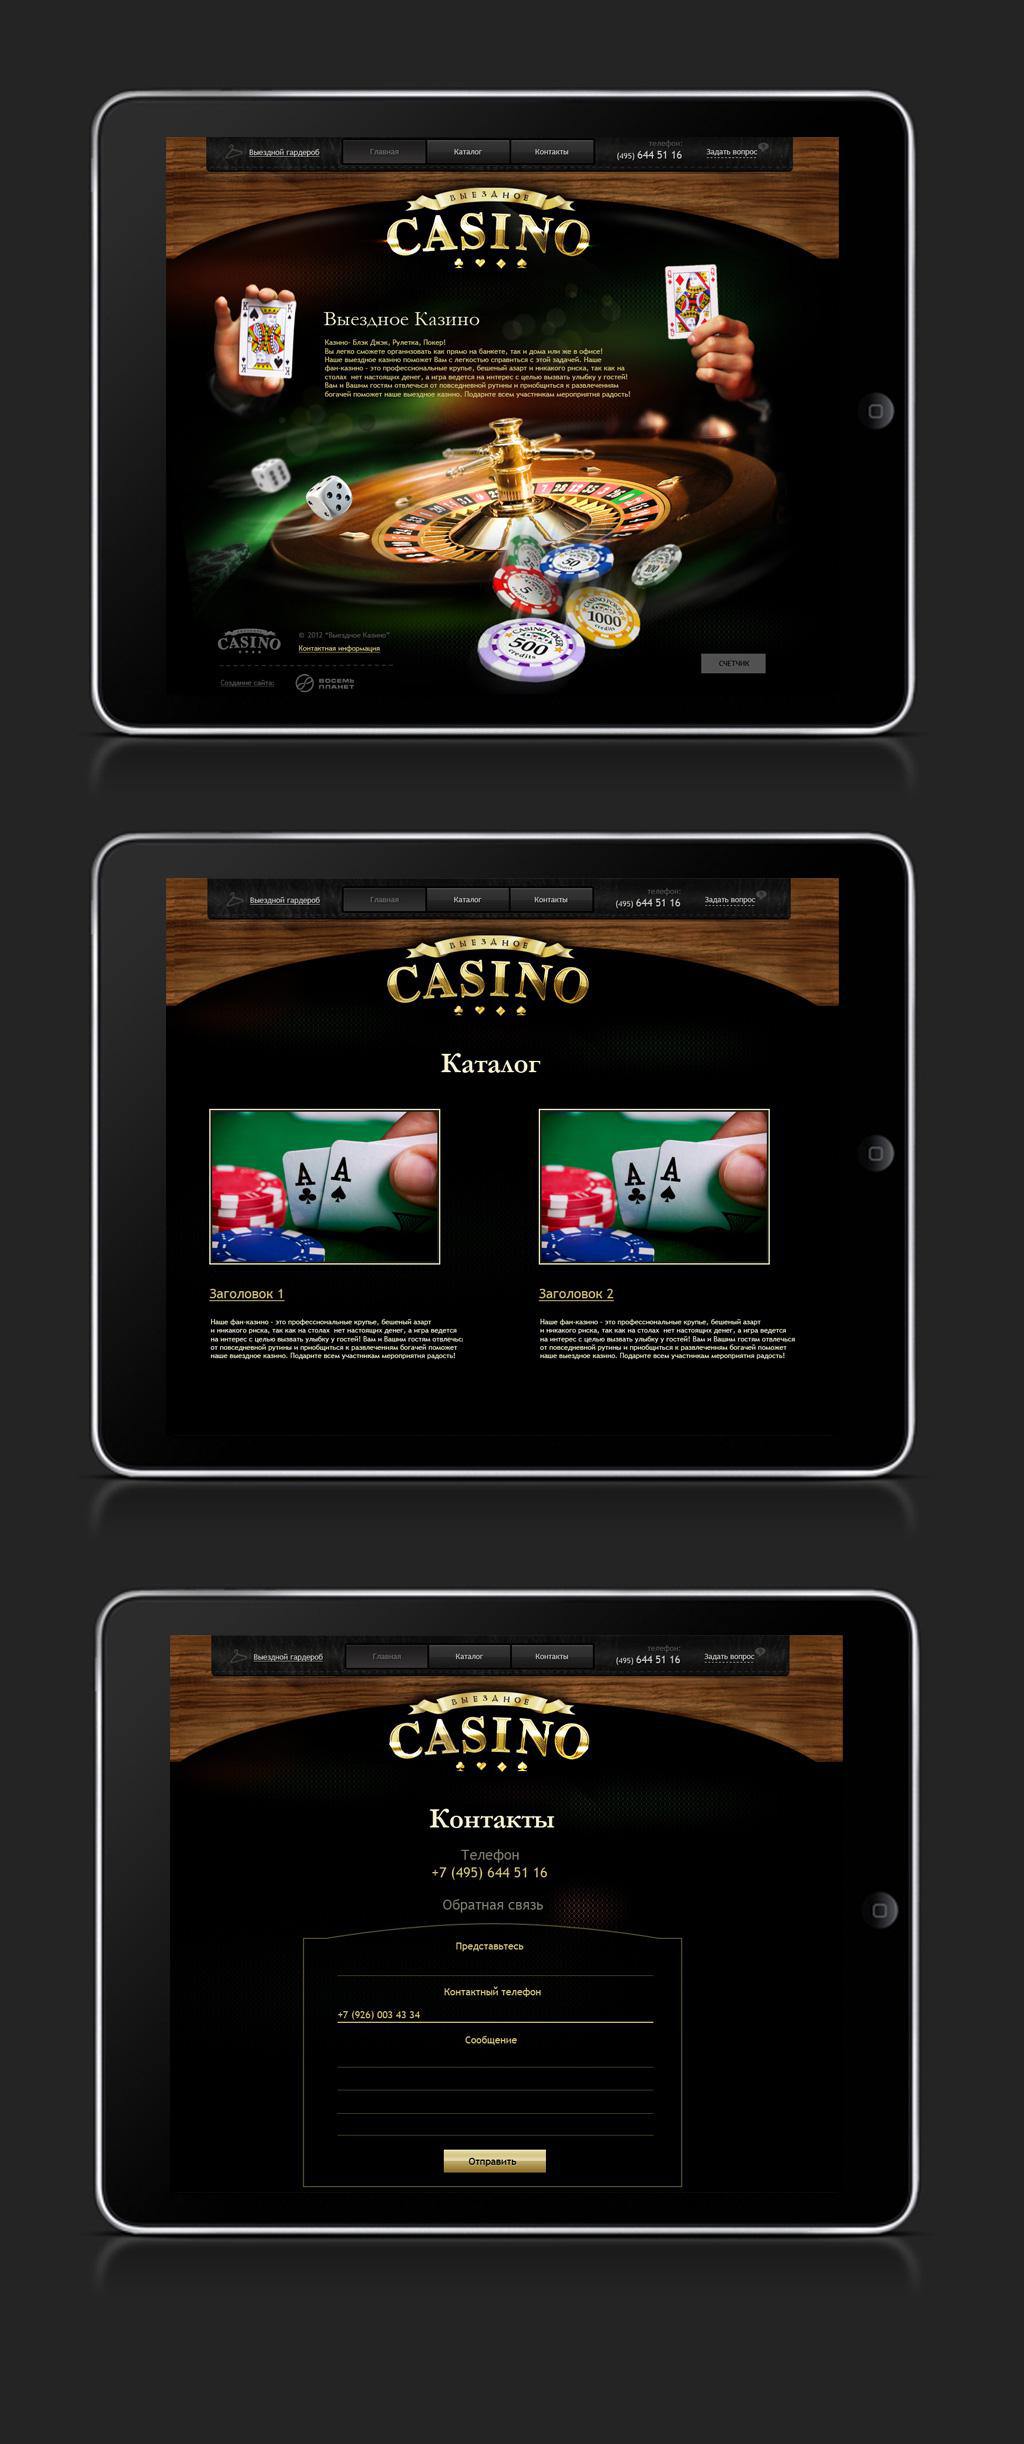 Casino 495 best casino online betsofa